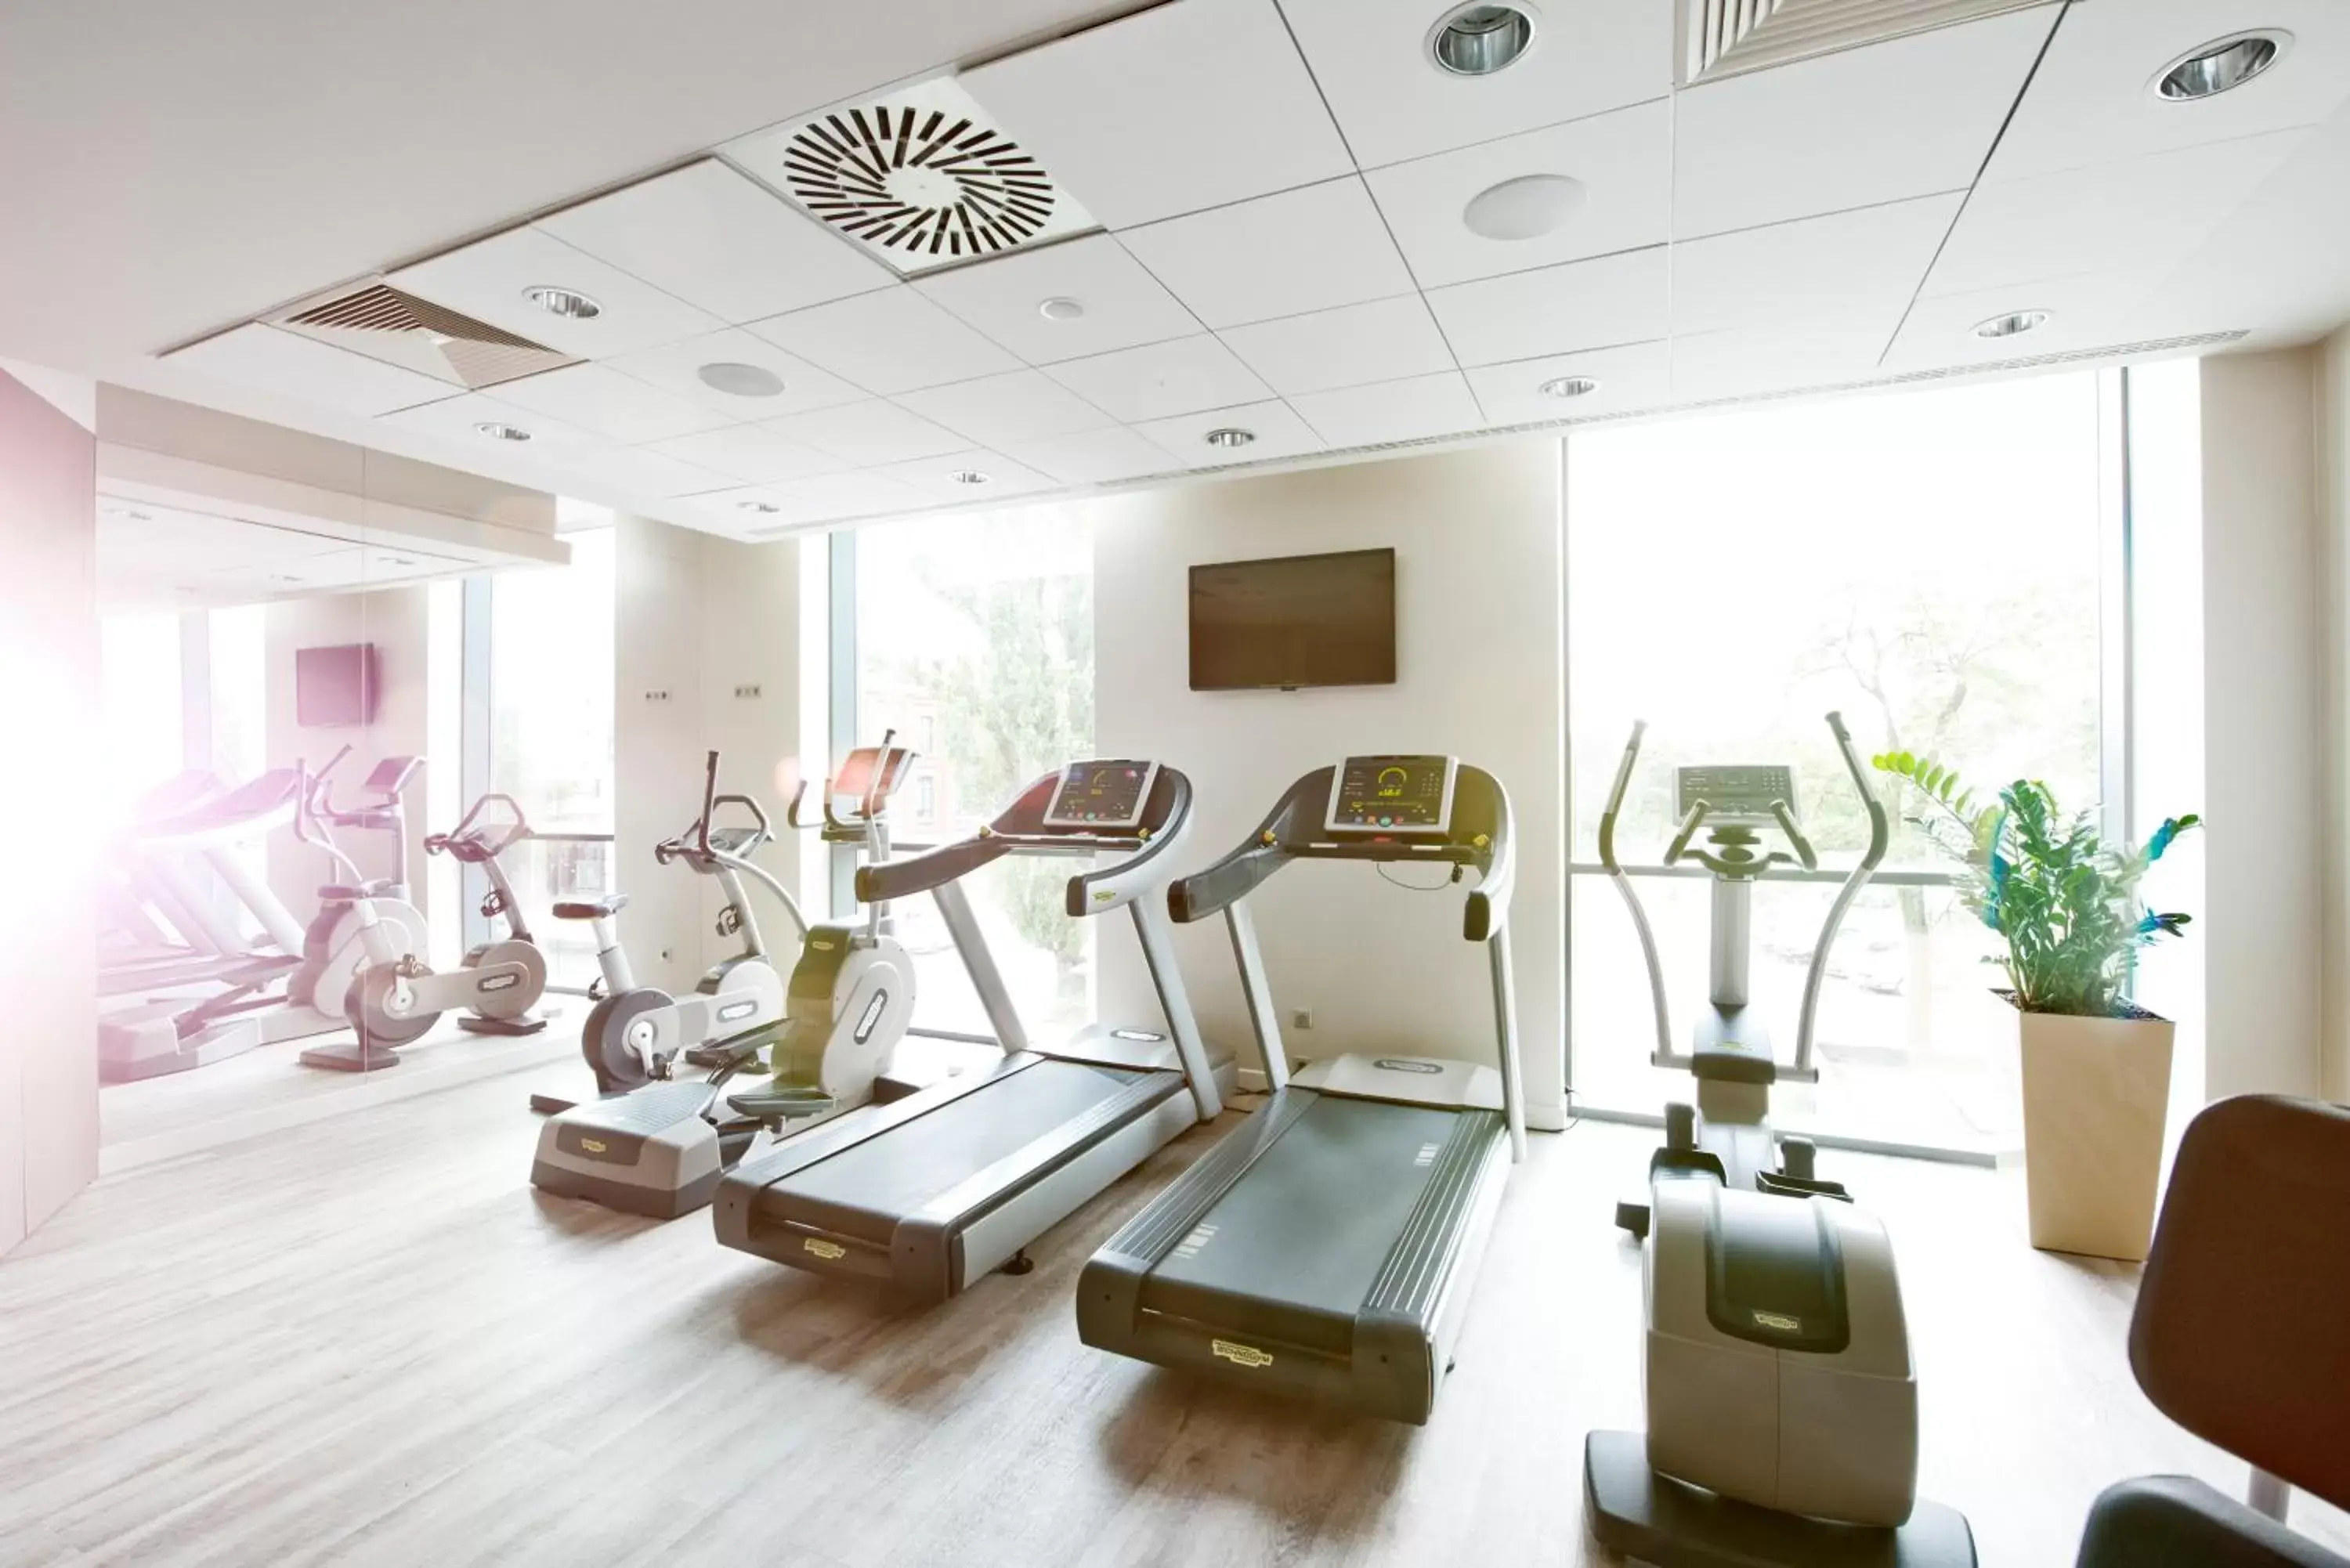 Fitness centre/facilities, Fitness Center/Facilities in Novotel Lodz Centrum